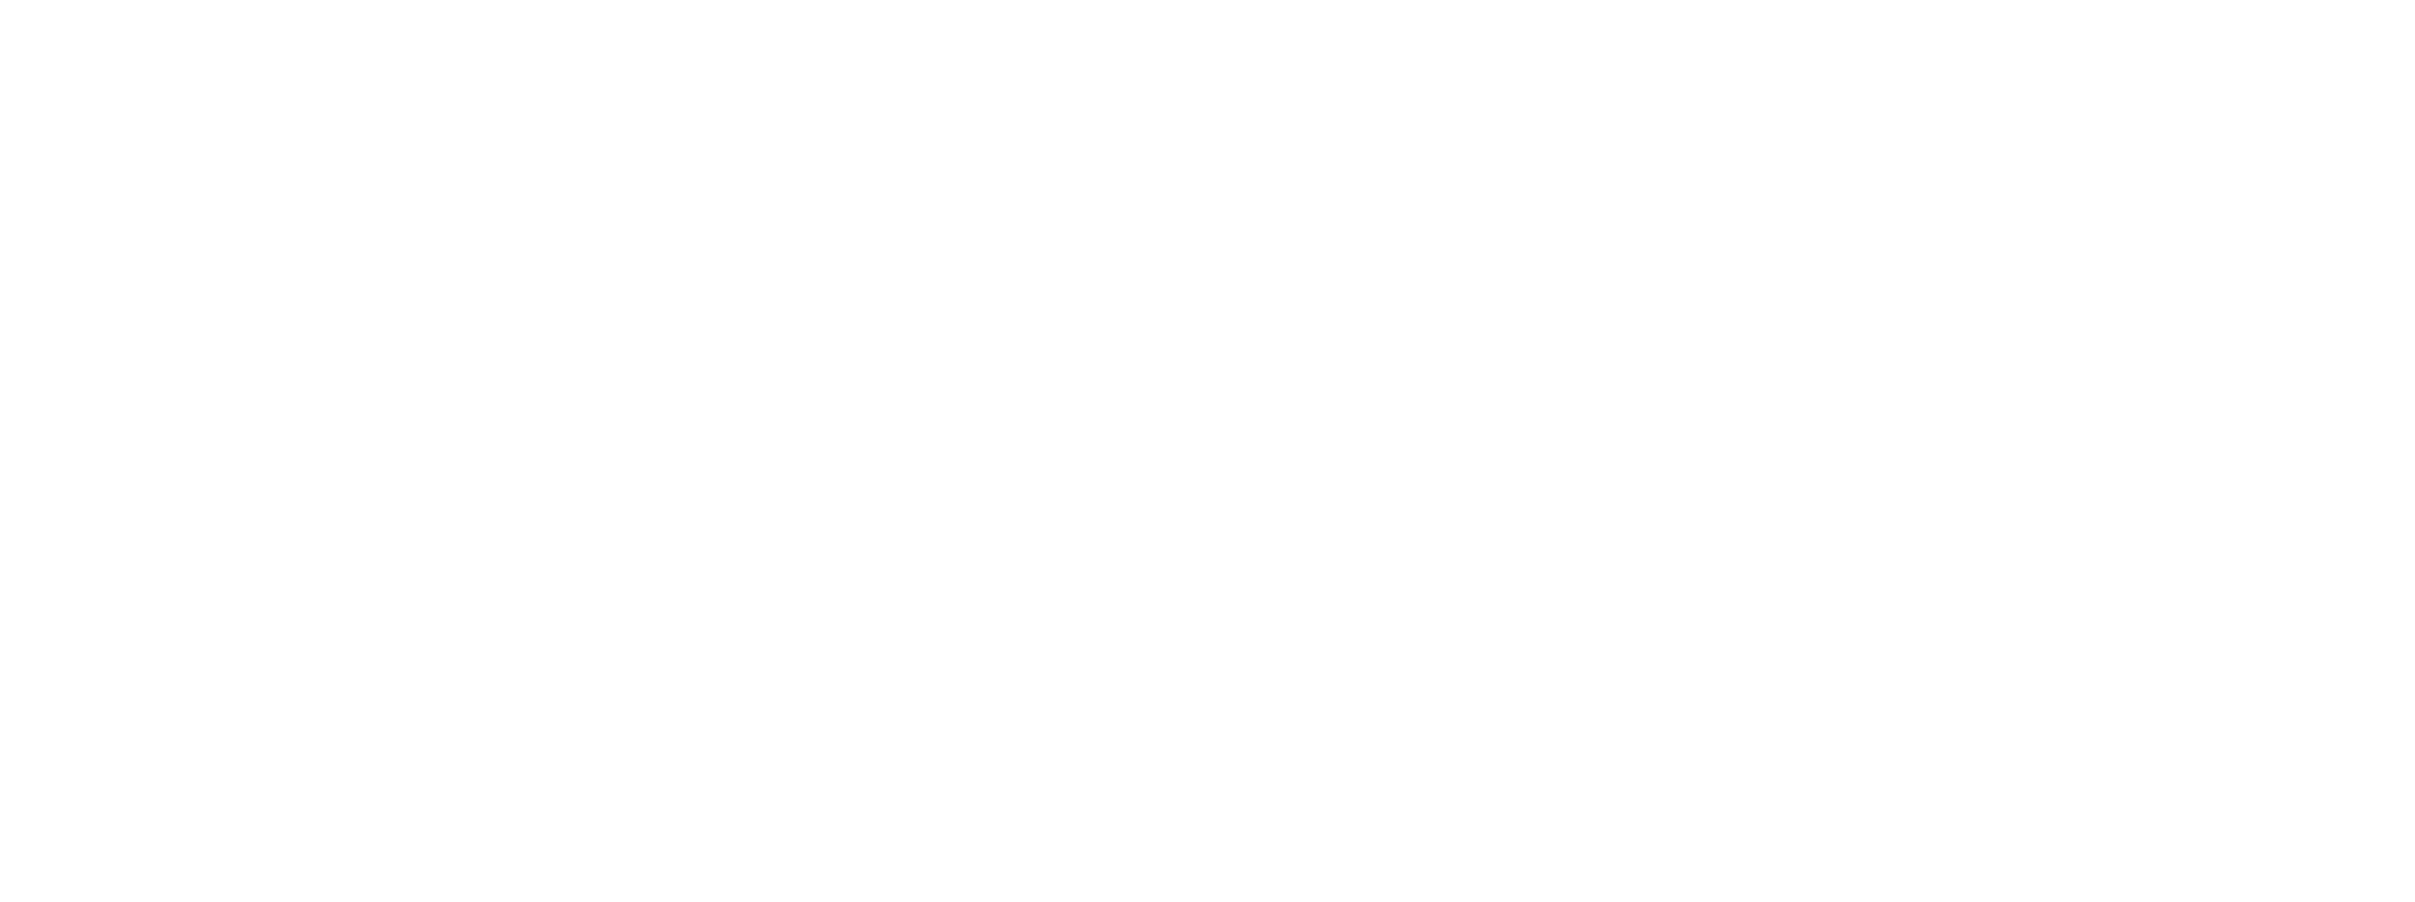 PCL Communications